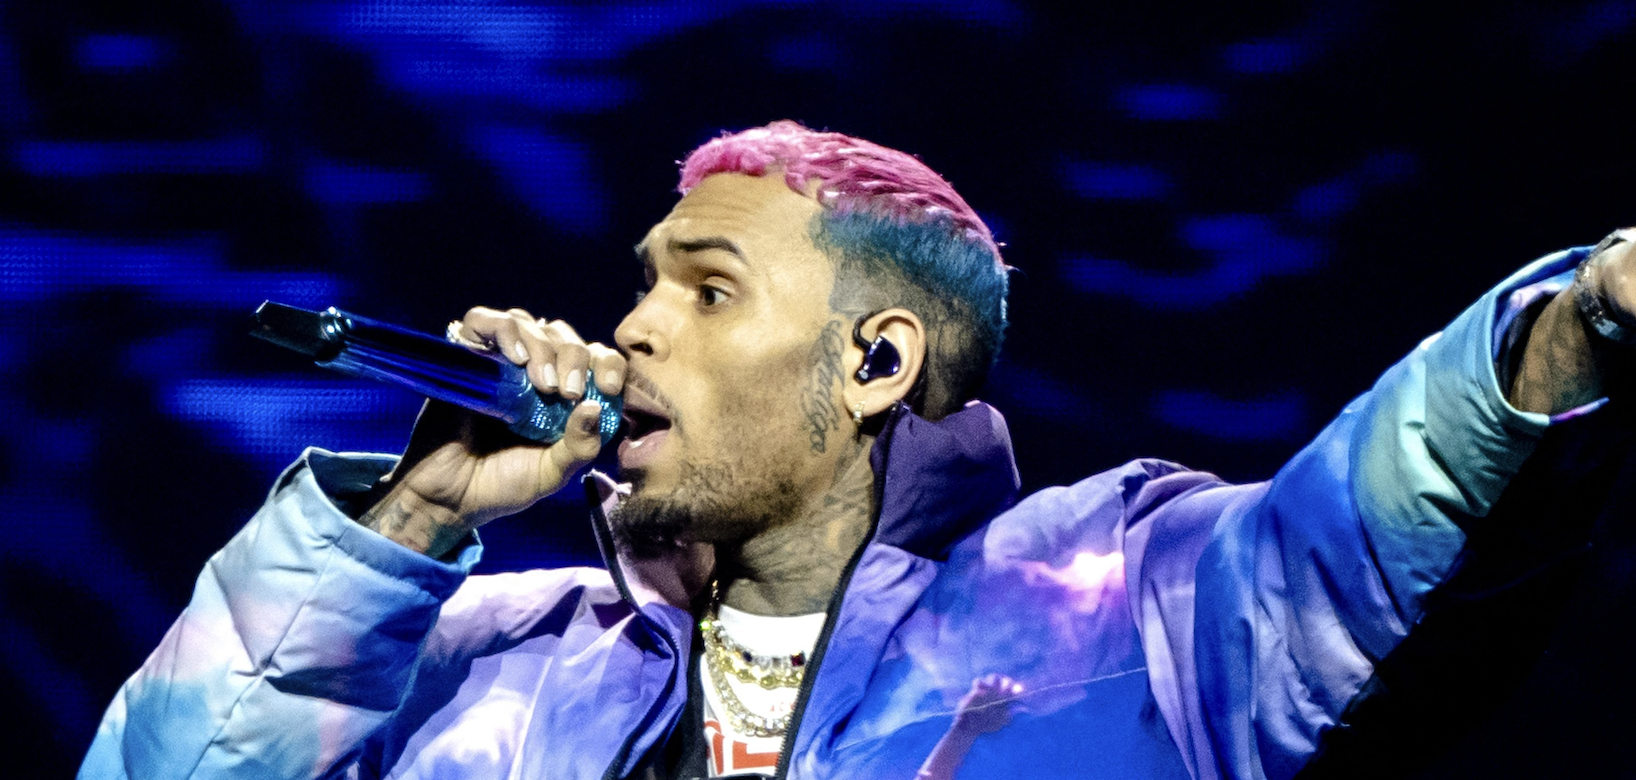 Chris Brown Calls Himself A “Rizz God”